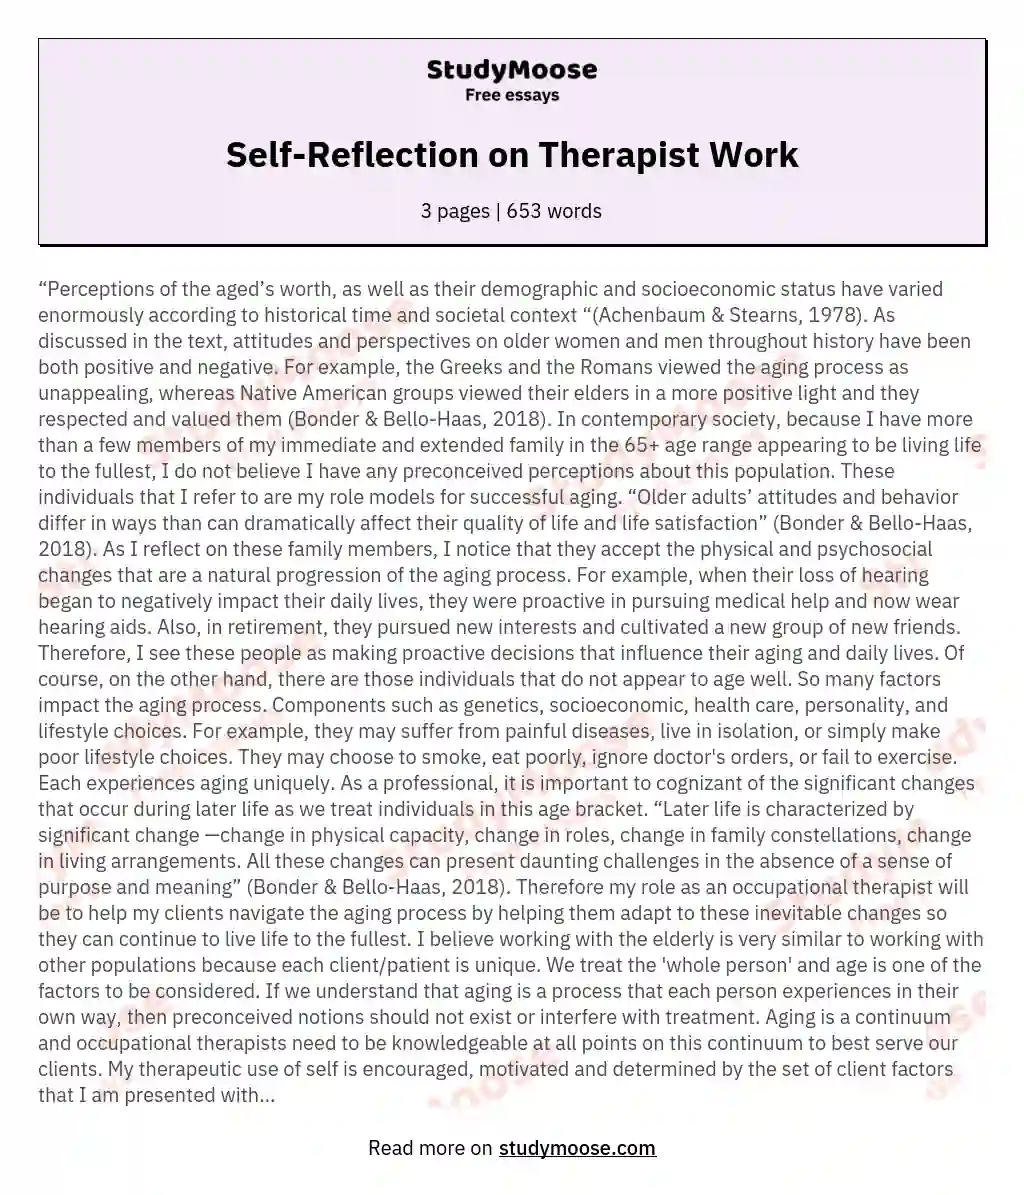 Self-Reflection on Therapist Work essay